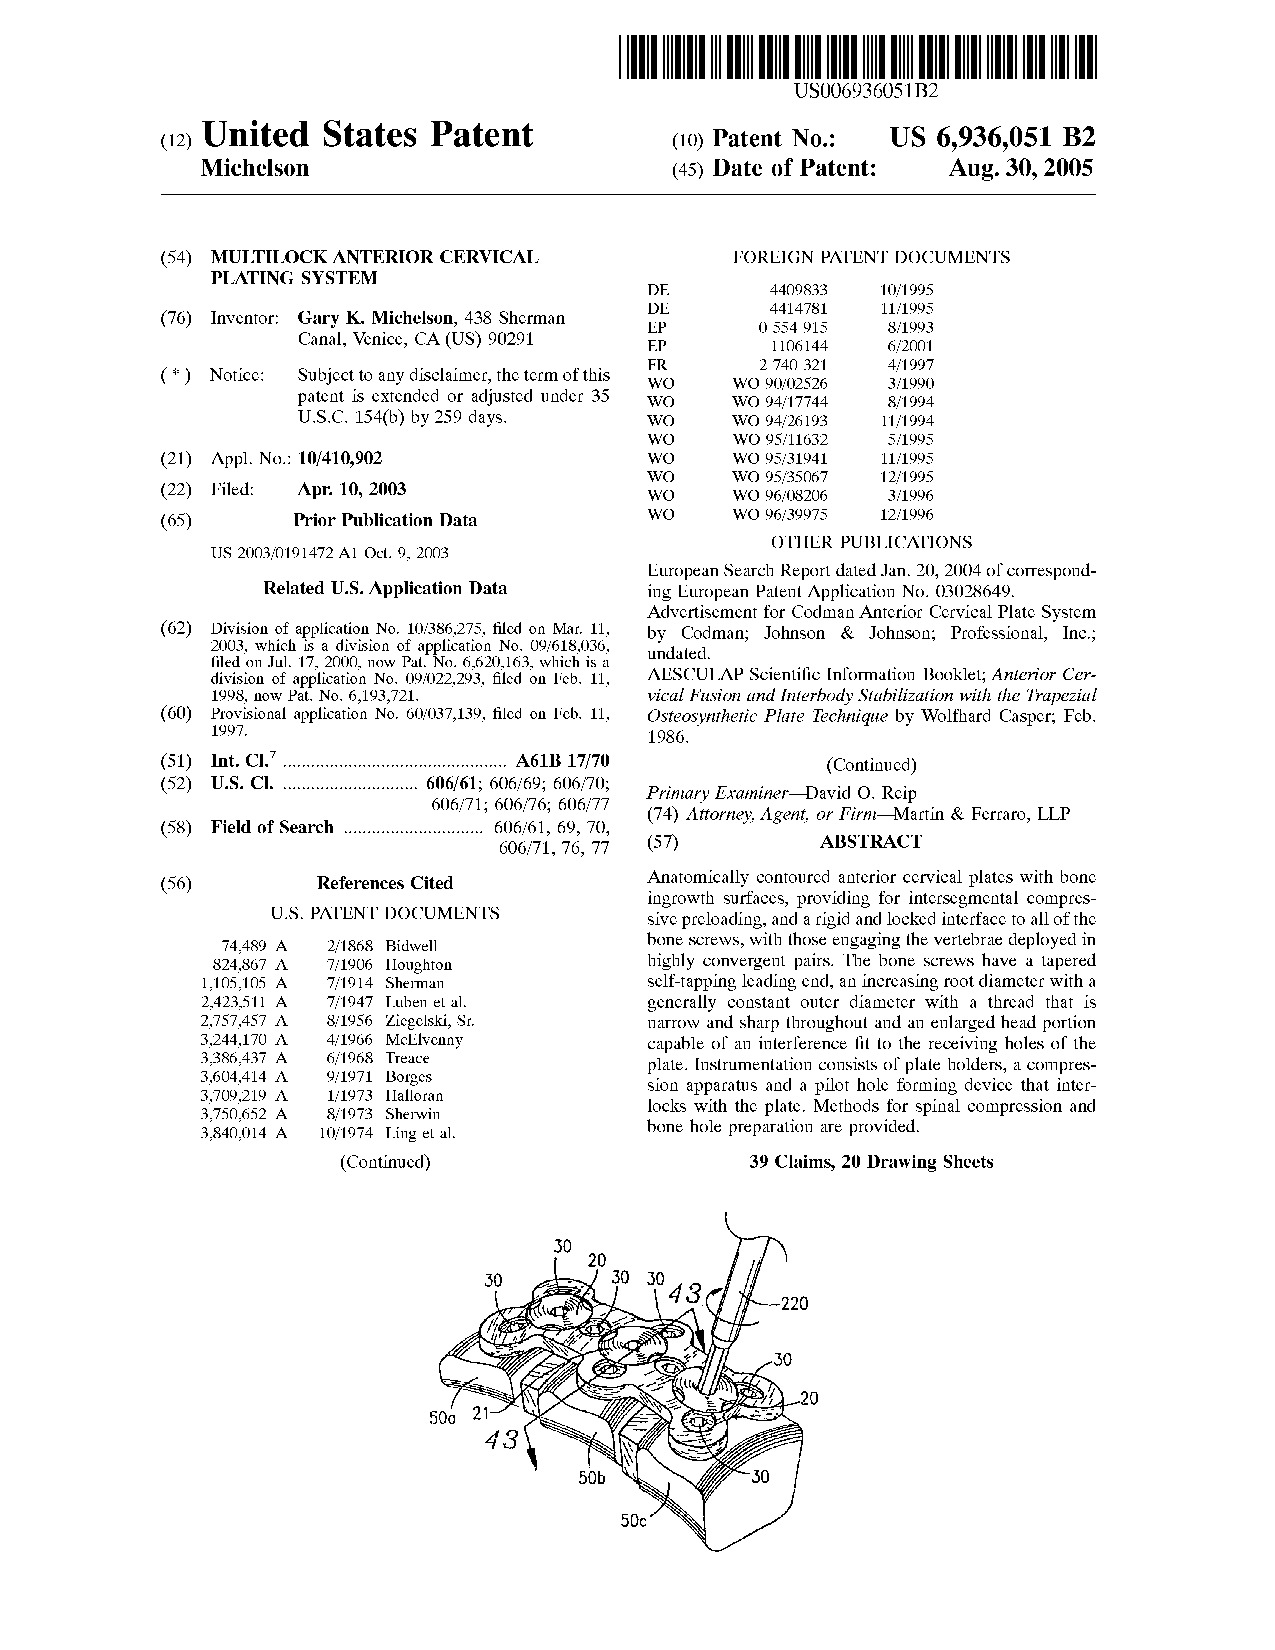 Multilock anterior cervical plating system - Patent 6,936,051